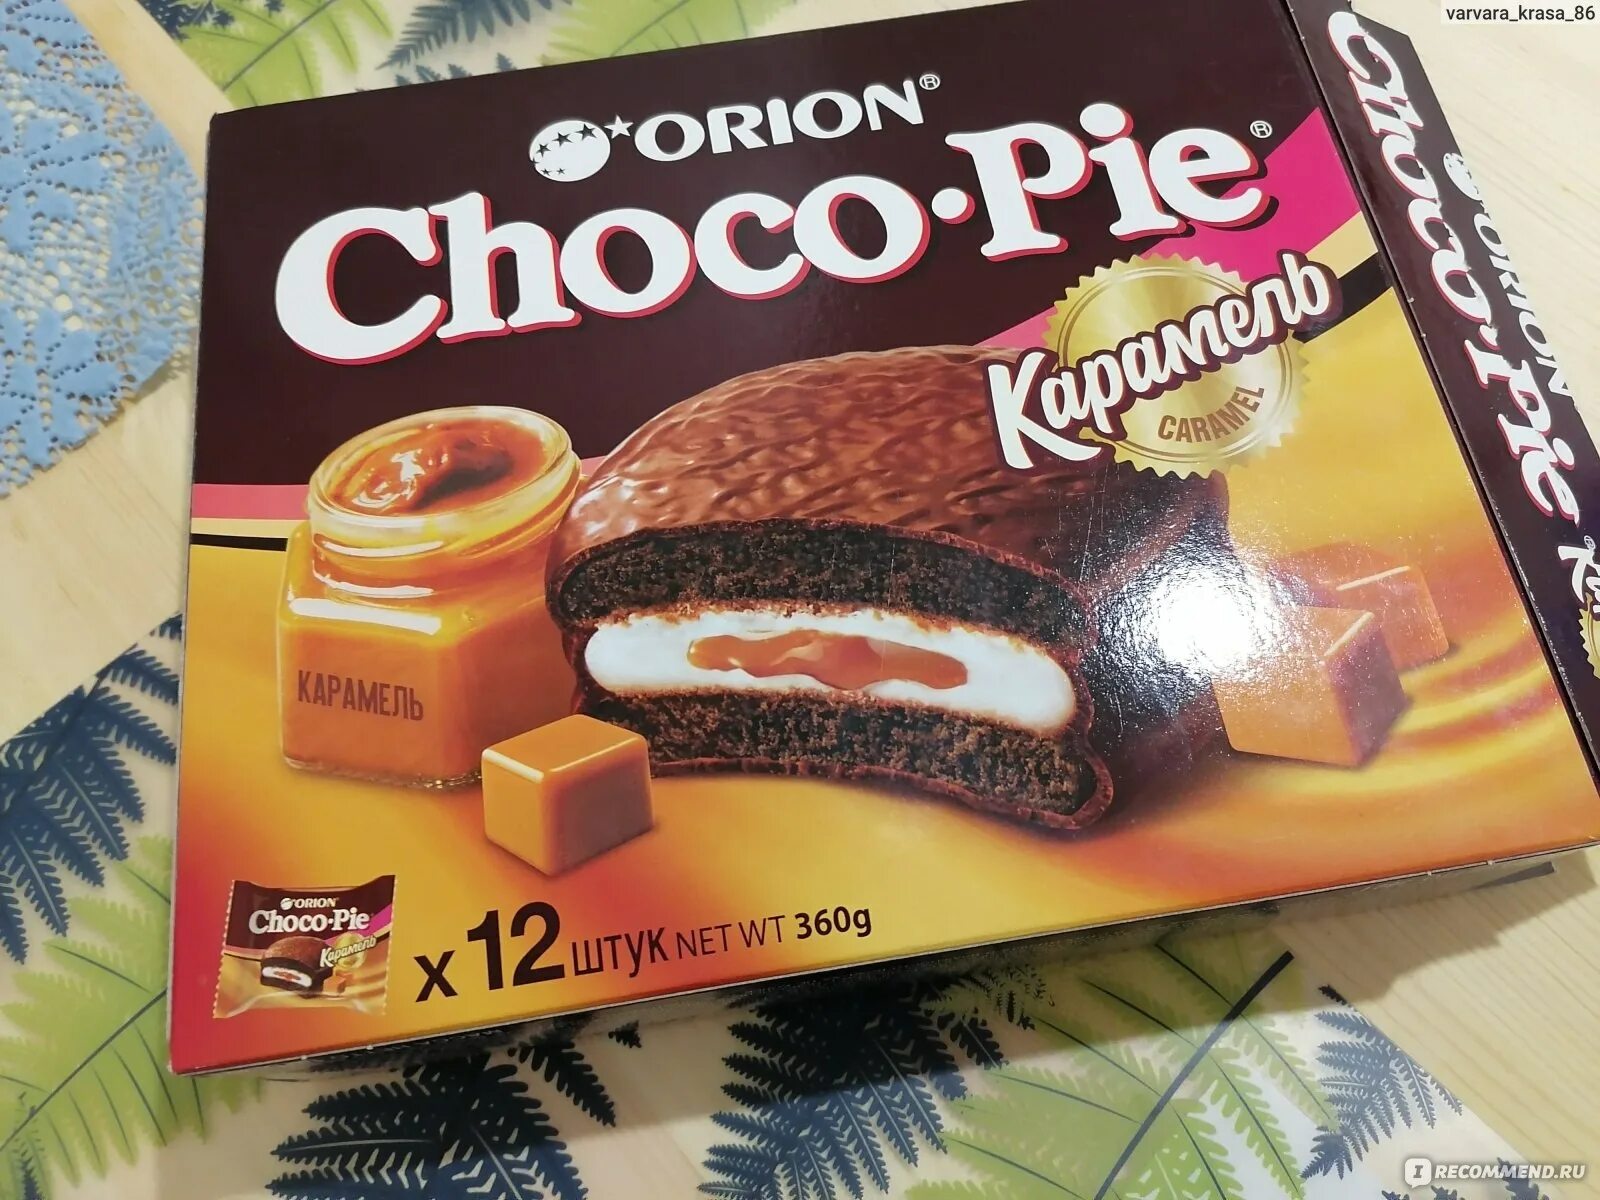 Чоко чоко отзывы. Орион чокопай карамель. Orion Choco pie вкусы. Orion Choco pie Dark 6 шт. Чокопай дарк карамель.